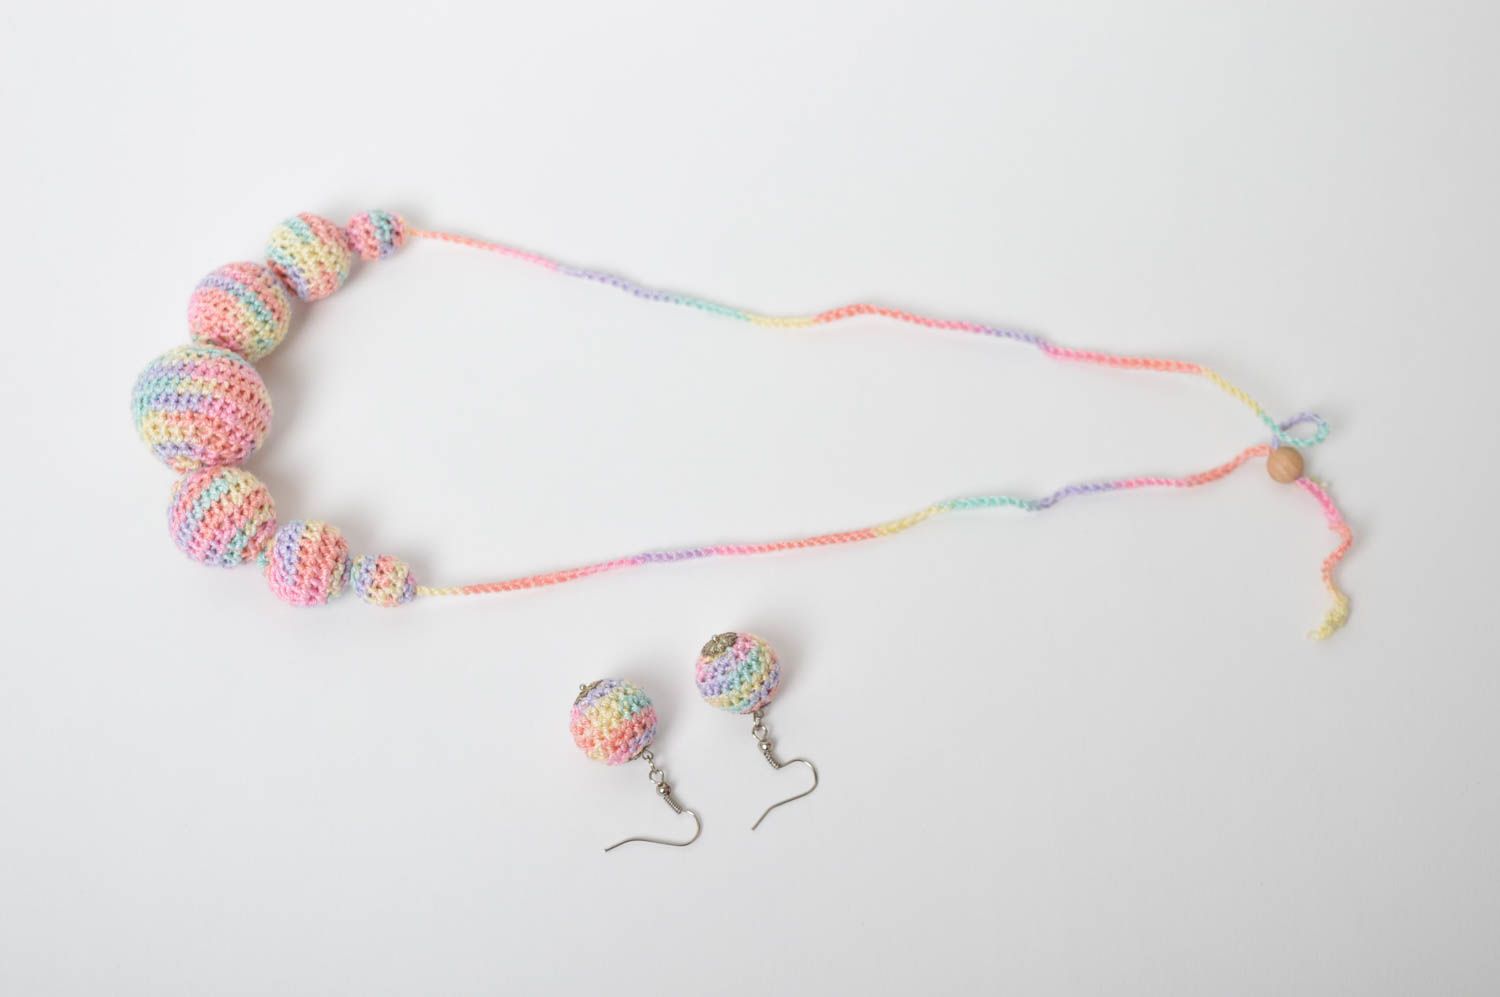 Handmade crochet earrings crochet ball necklace costume jewelry designs photo 4